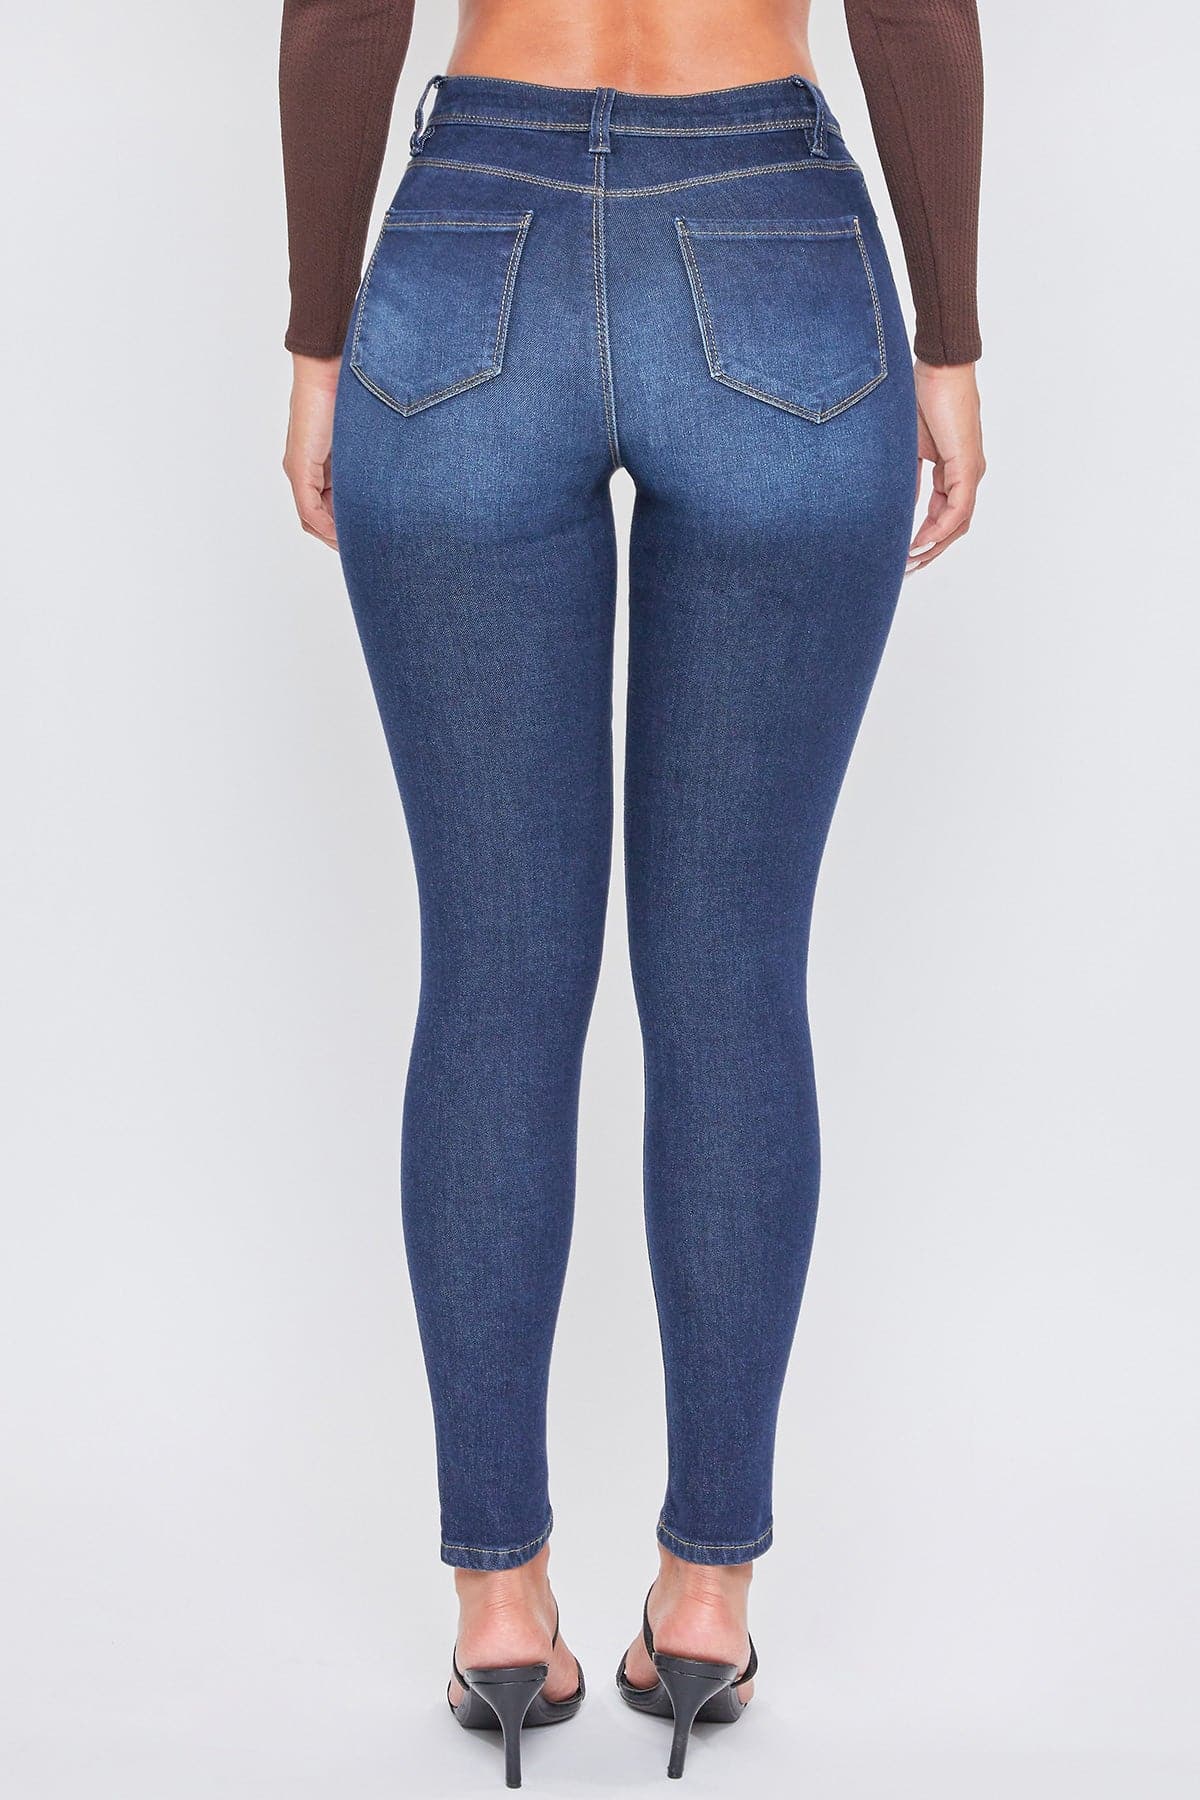 Essentials Women's High-Rise Skinny Jean